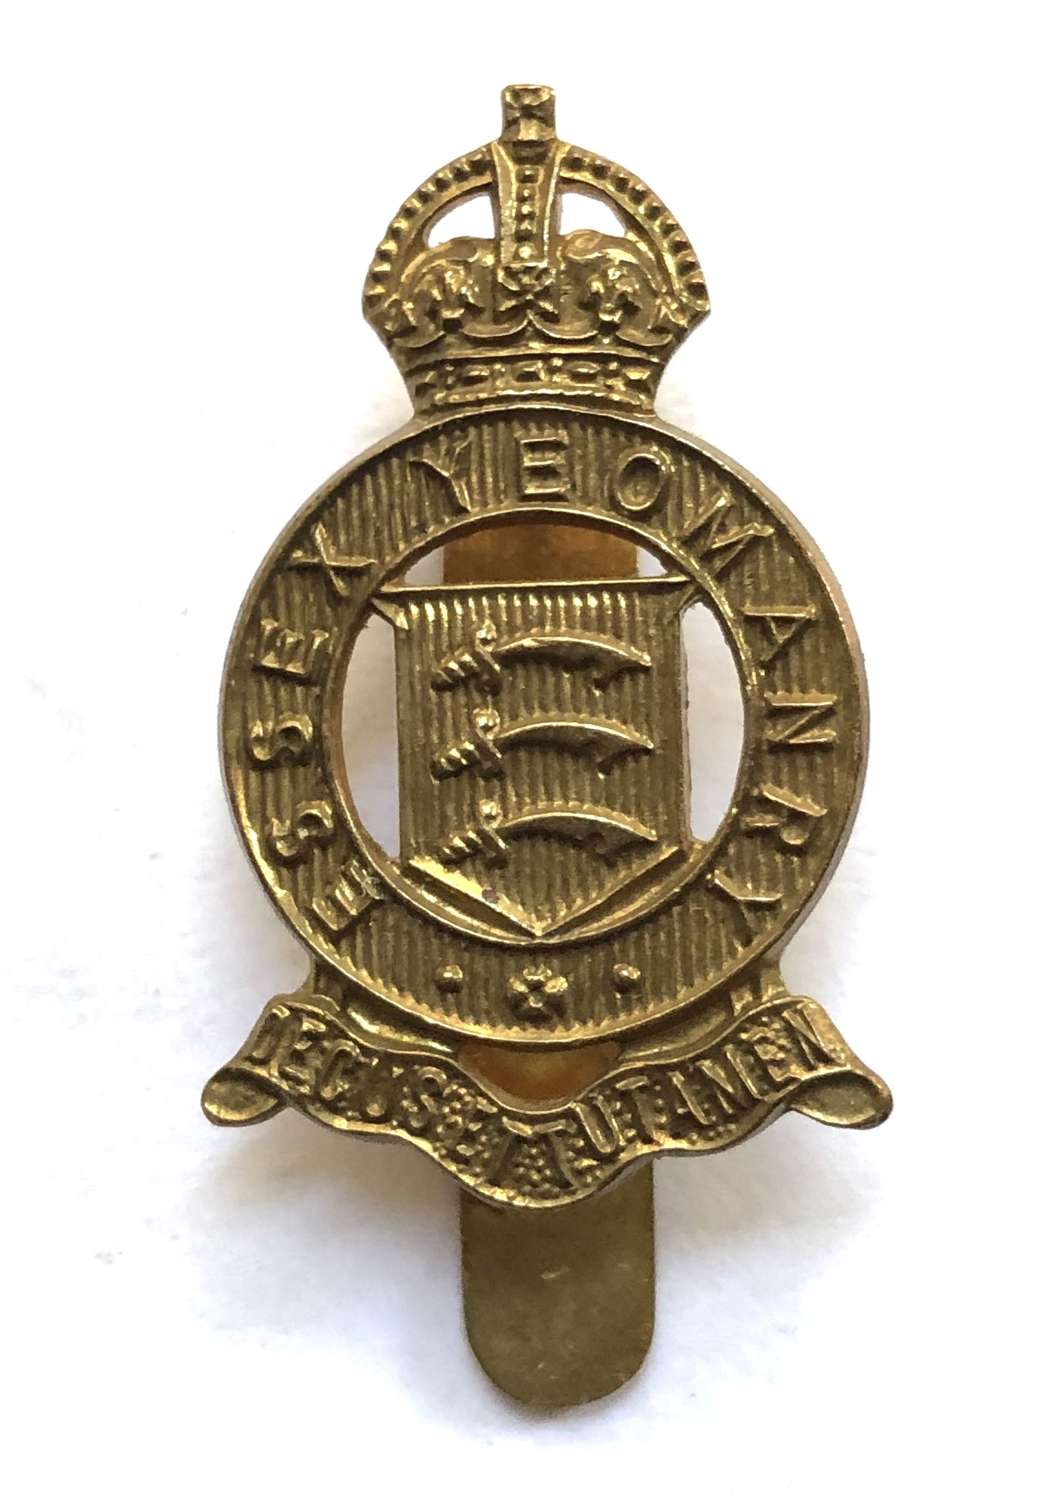 Essex Yeomanry beret badge